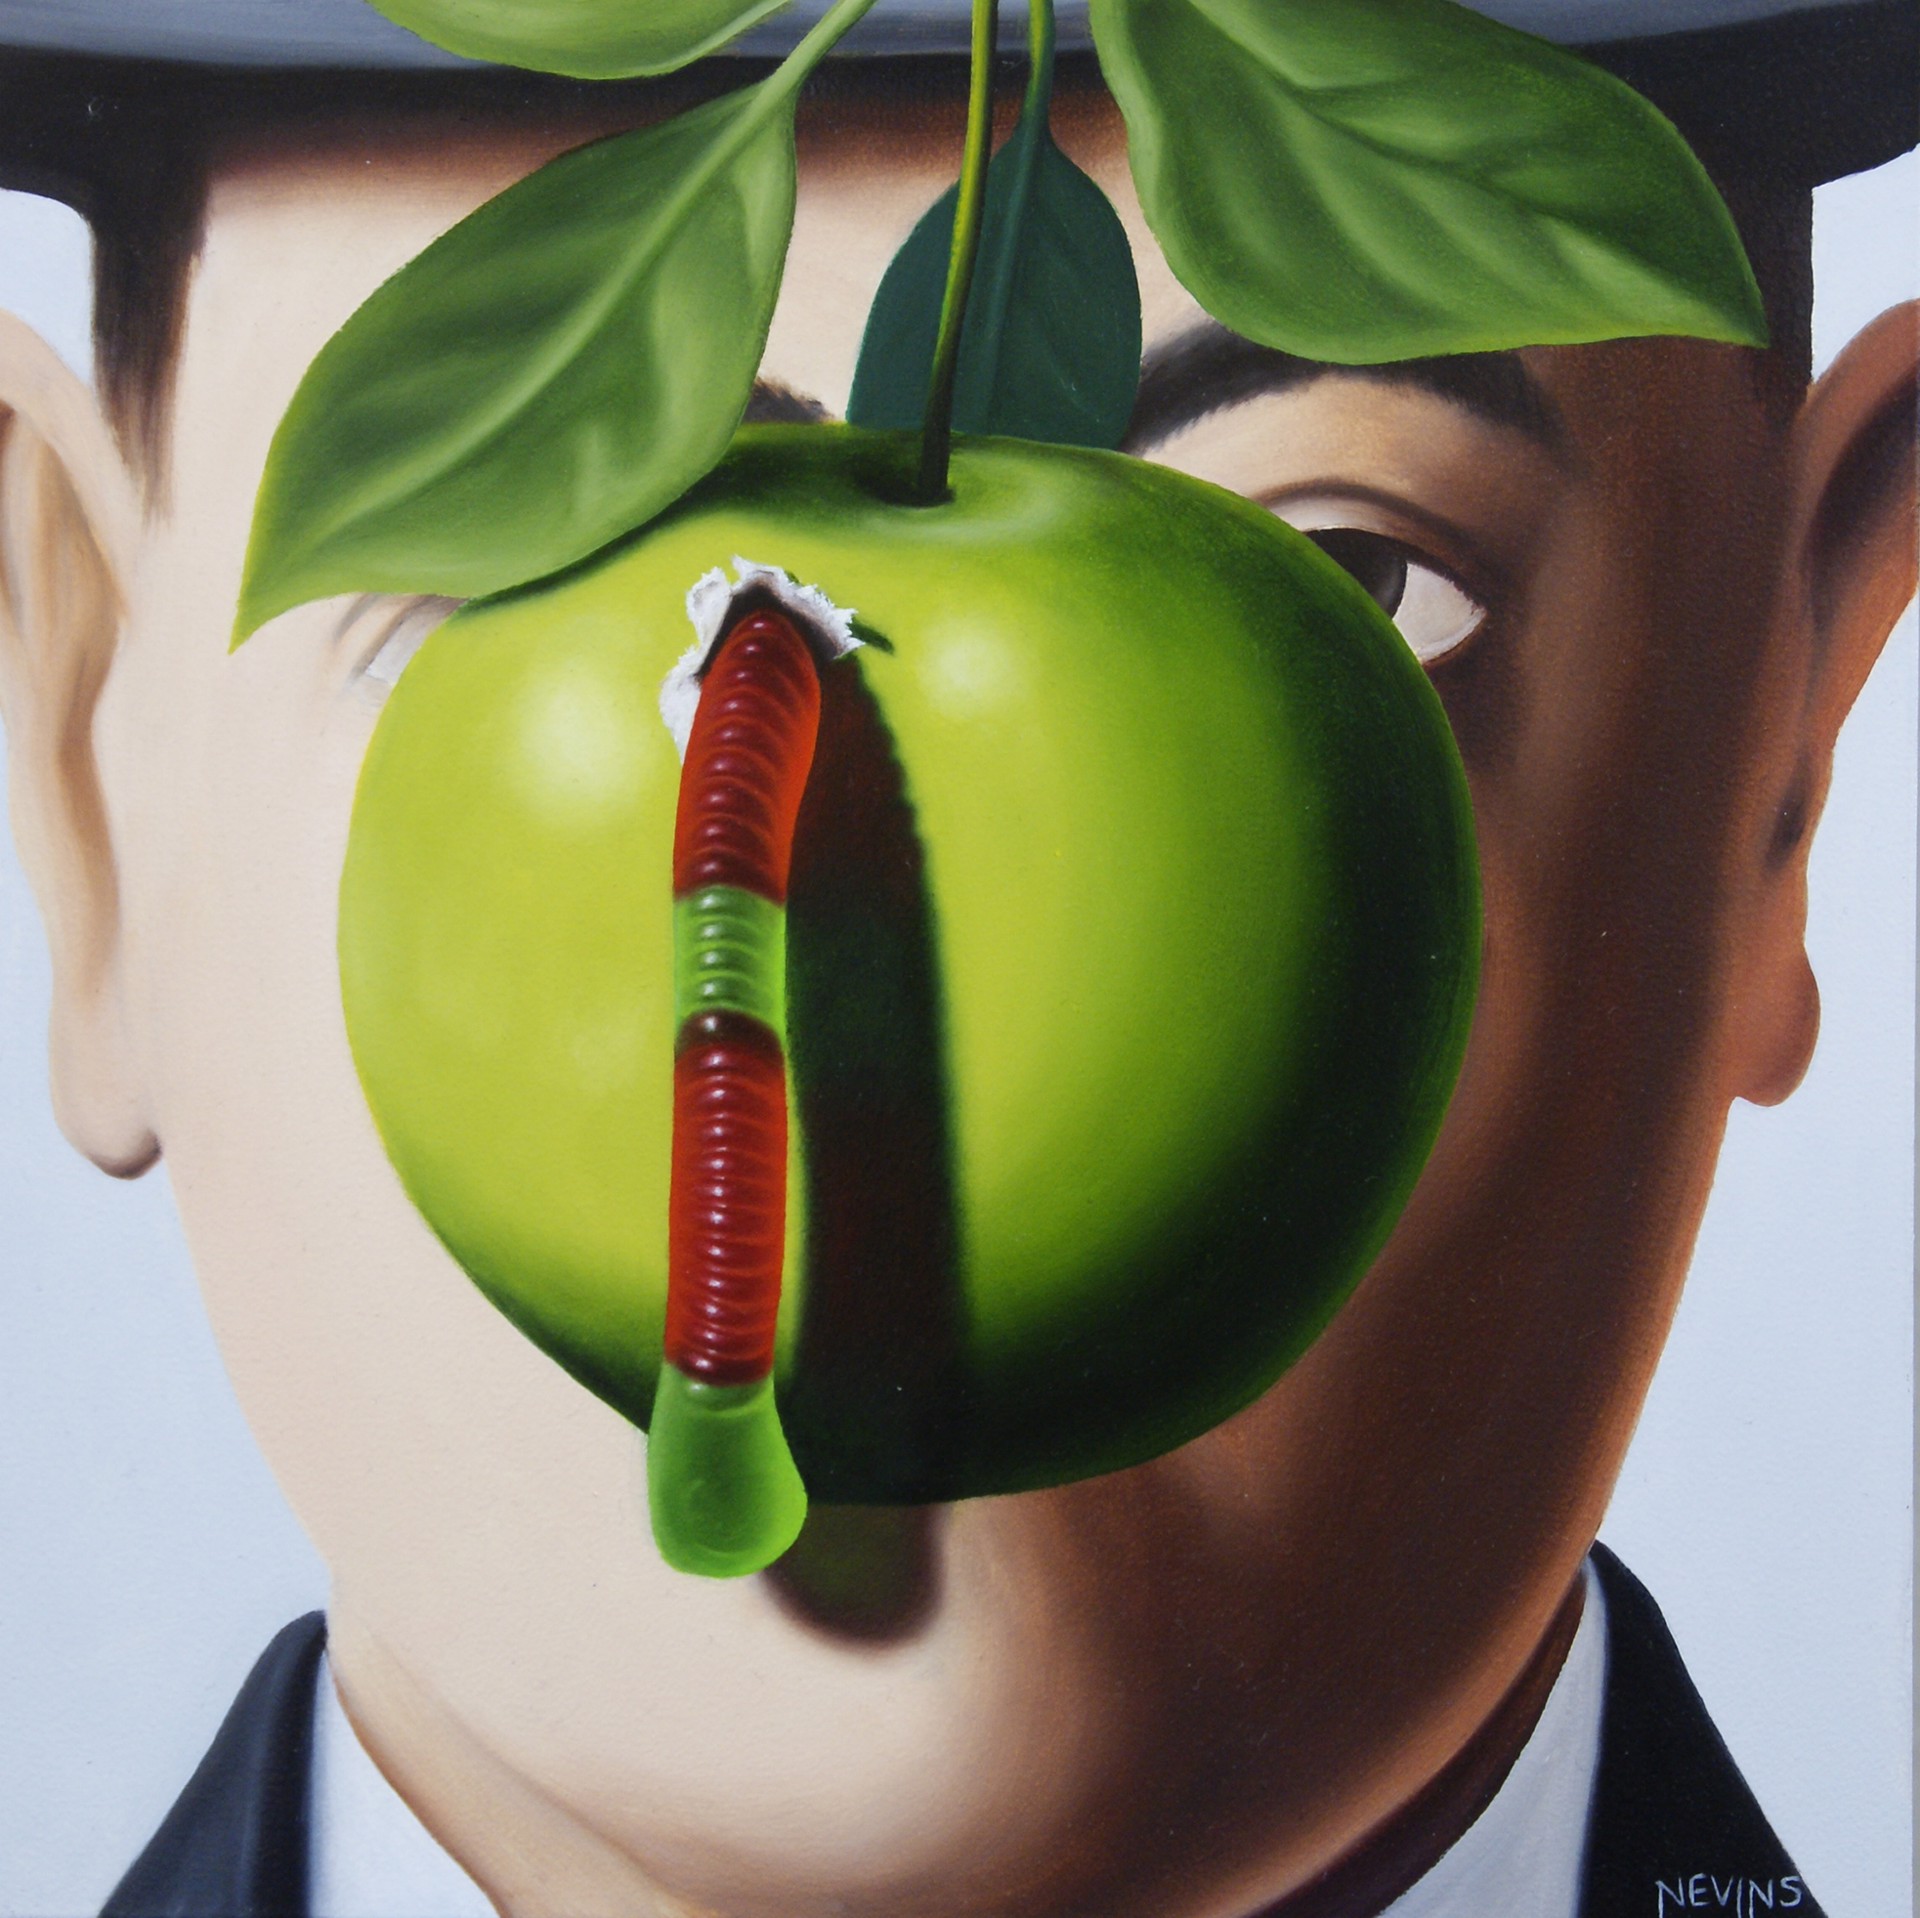 Candy Apple by Patrick Nevins